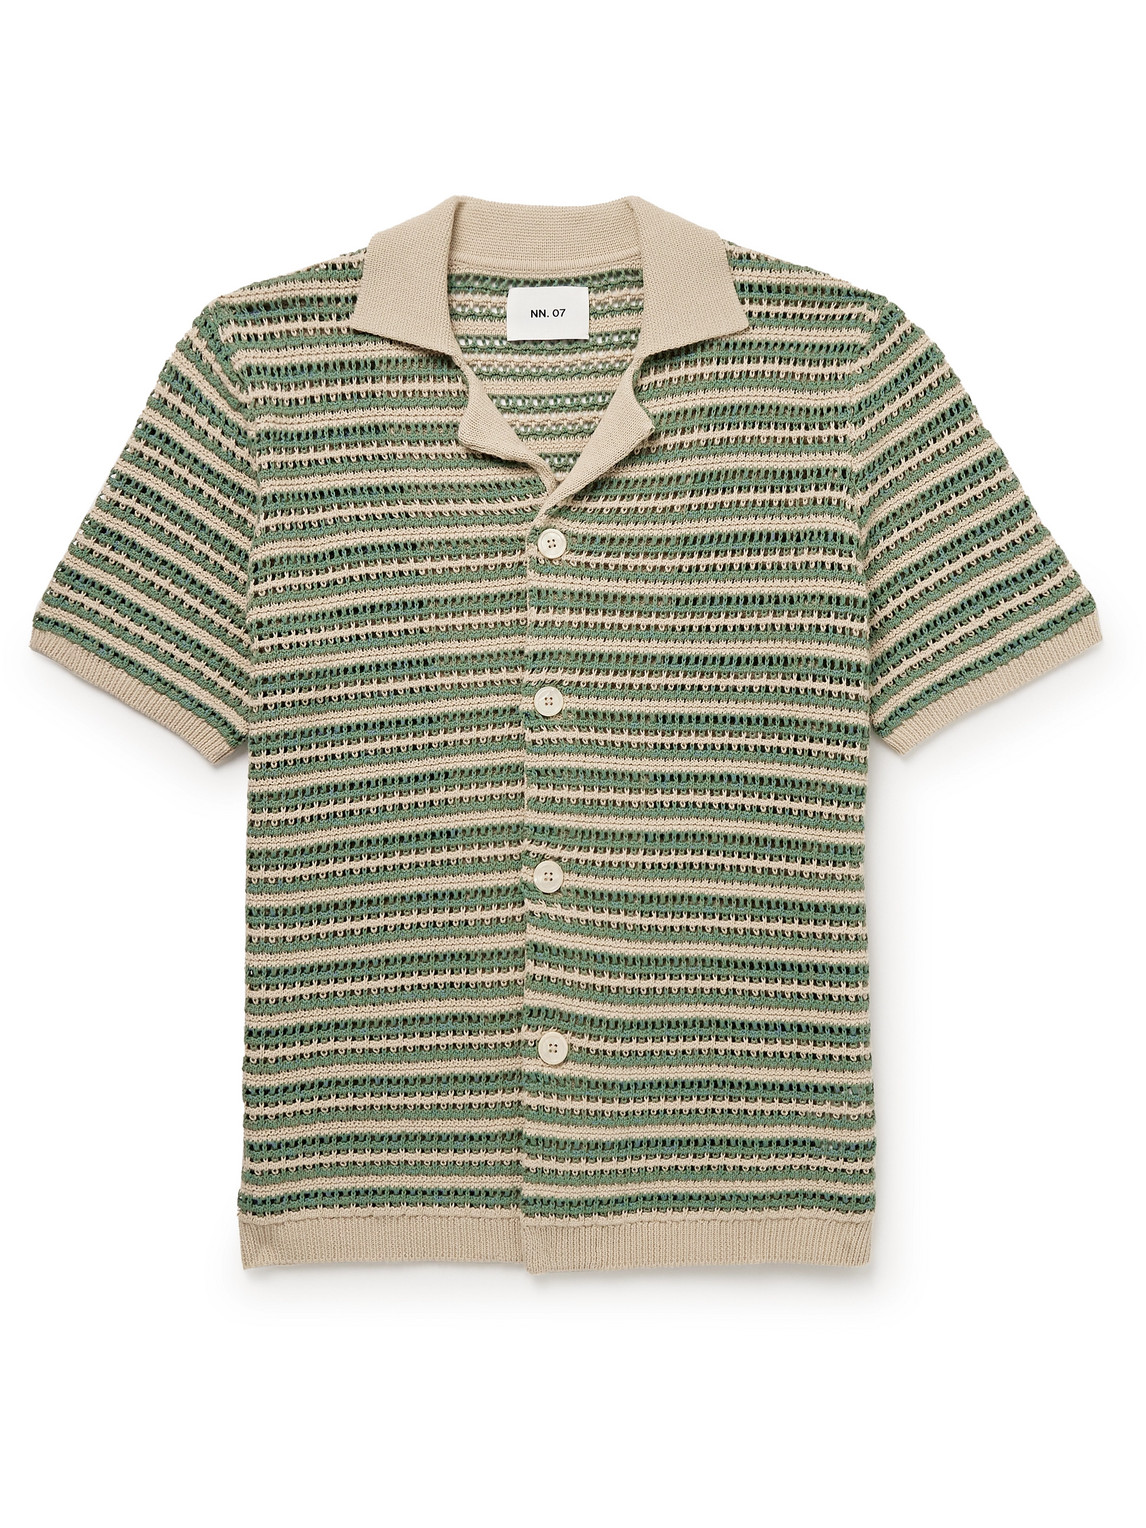 Henry 6636 Camp-Collar Striped Crocheted Organic Cotton Shirt